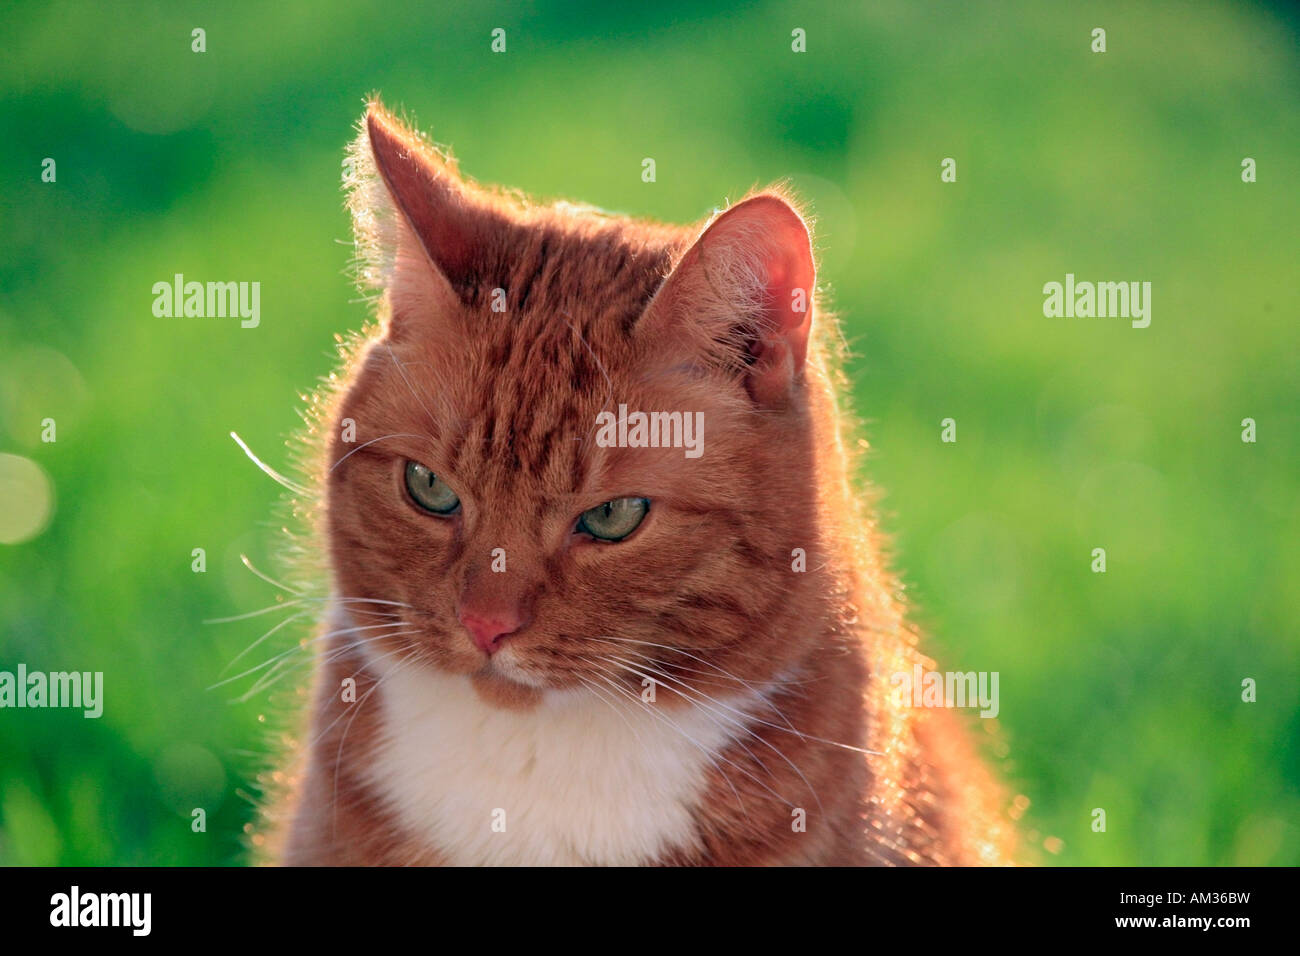 Red tabby cat, portrait Stock Photo